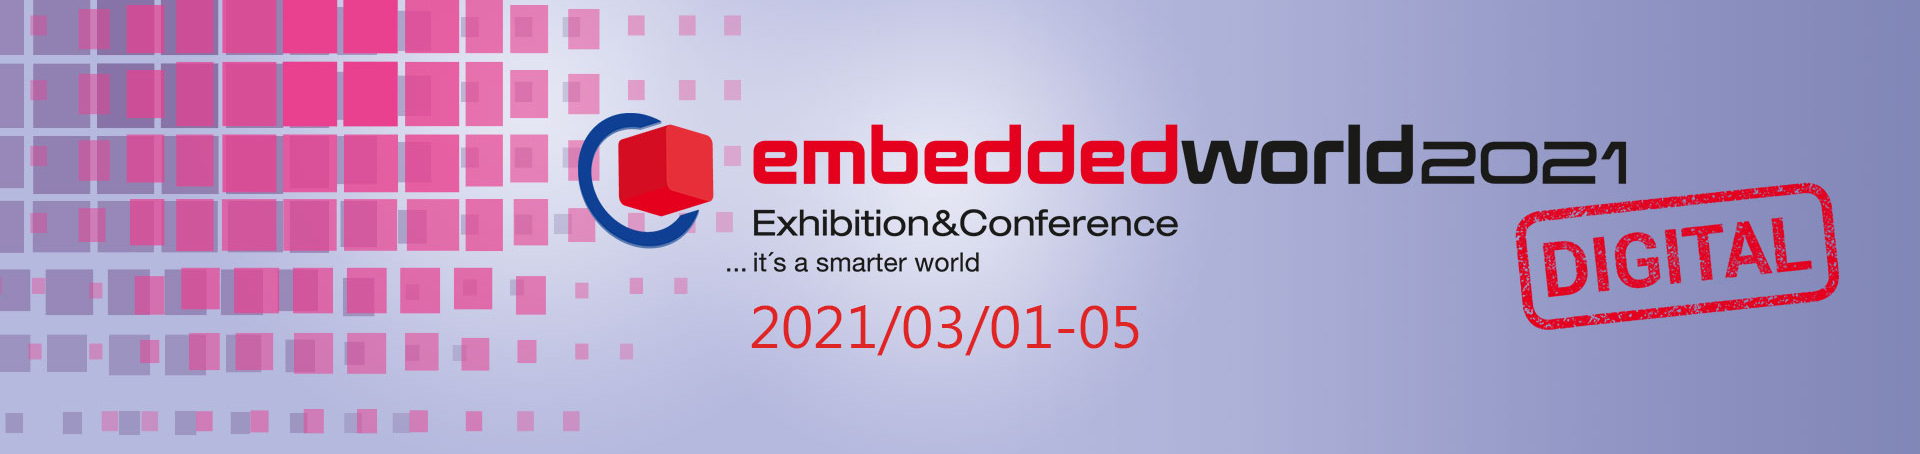 embedded-world-2021_1920x454.jpg